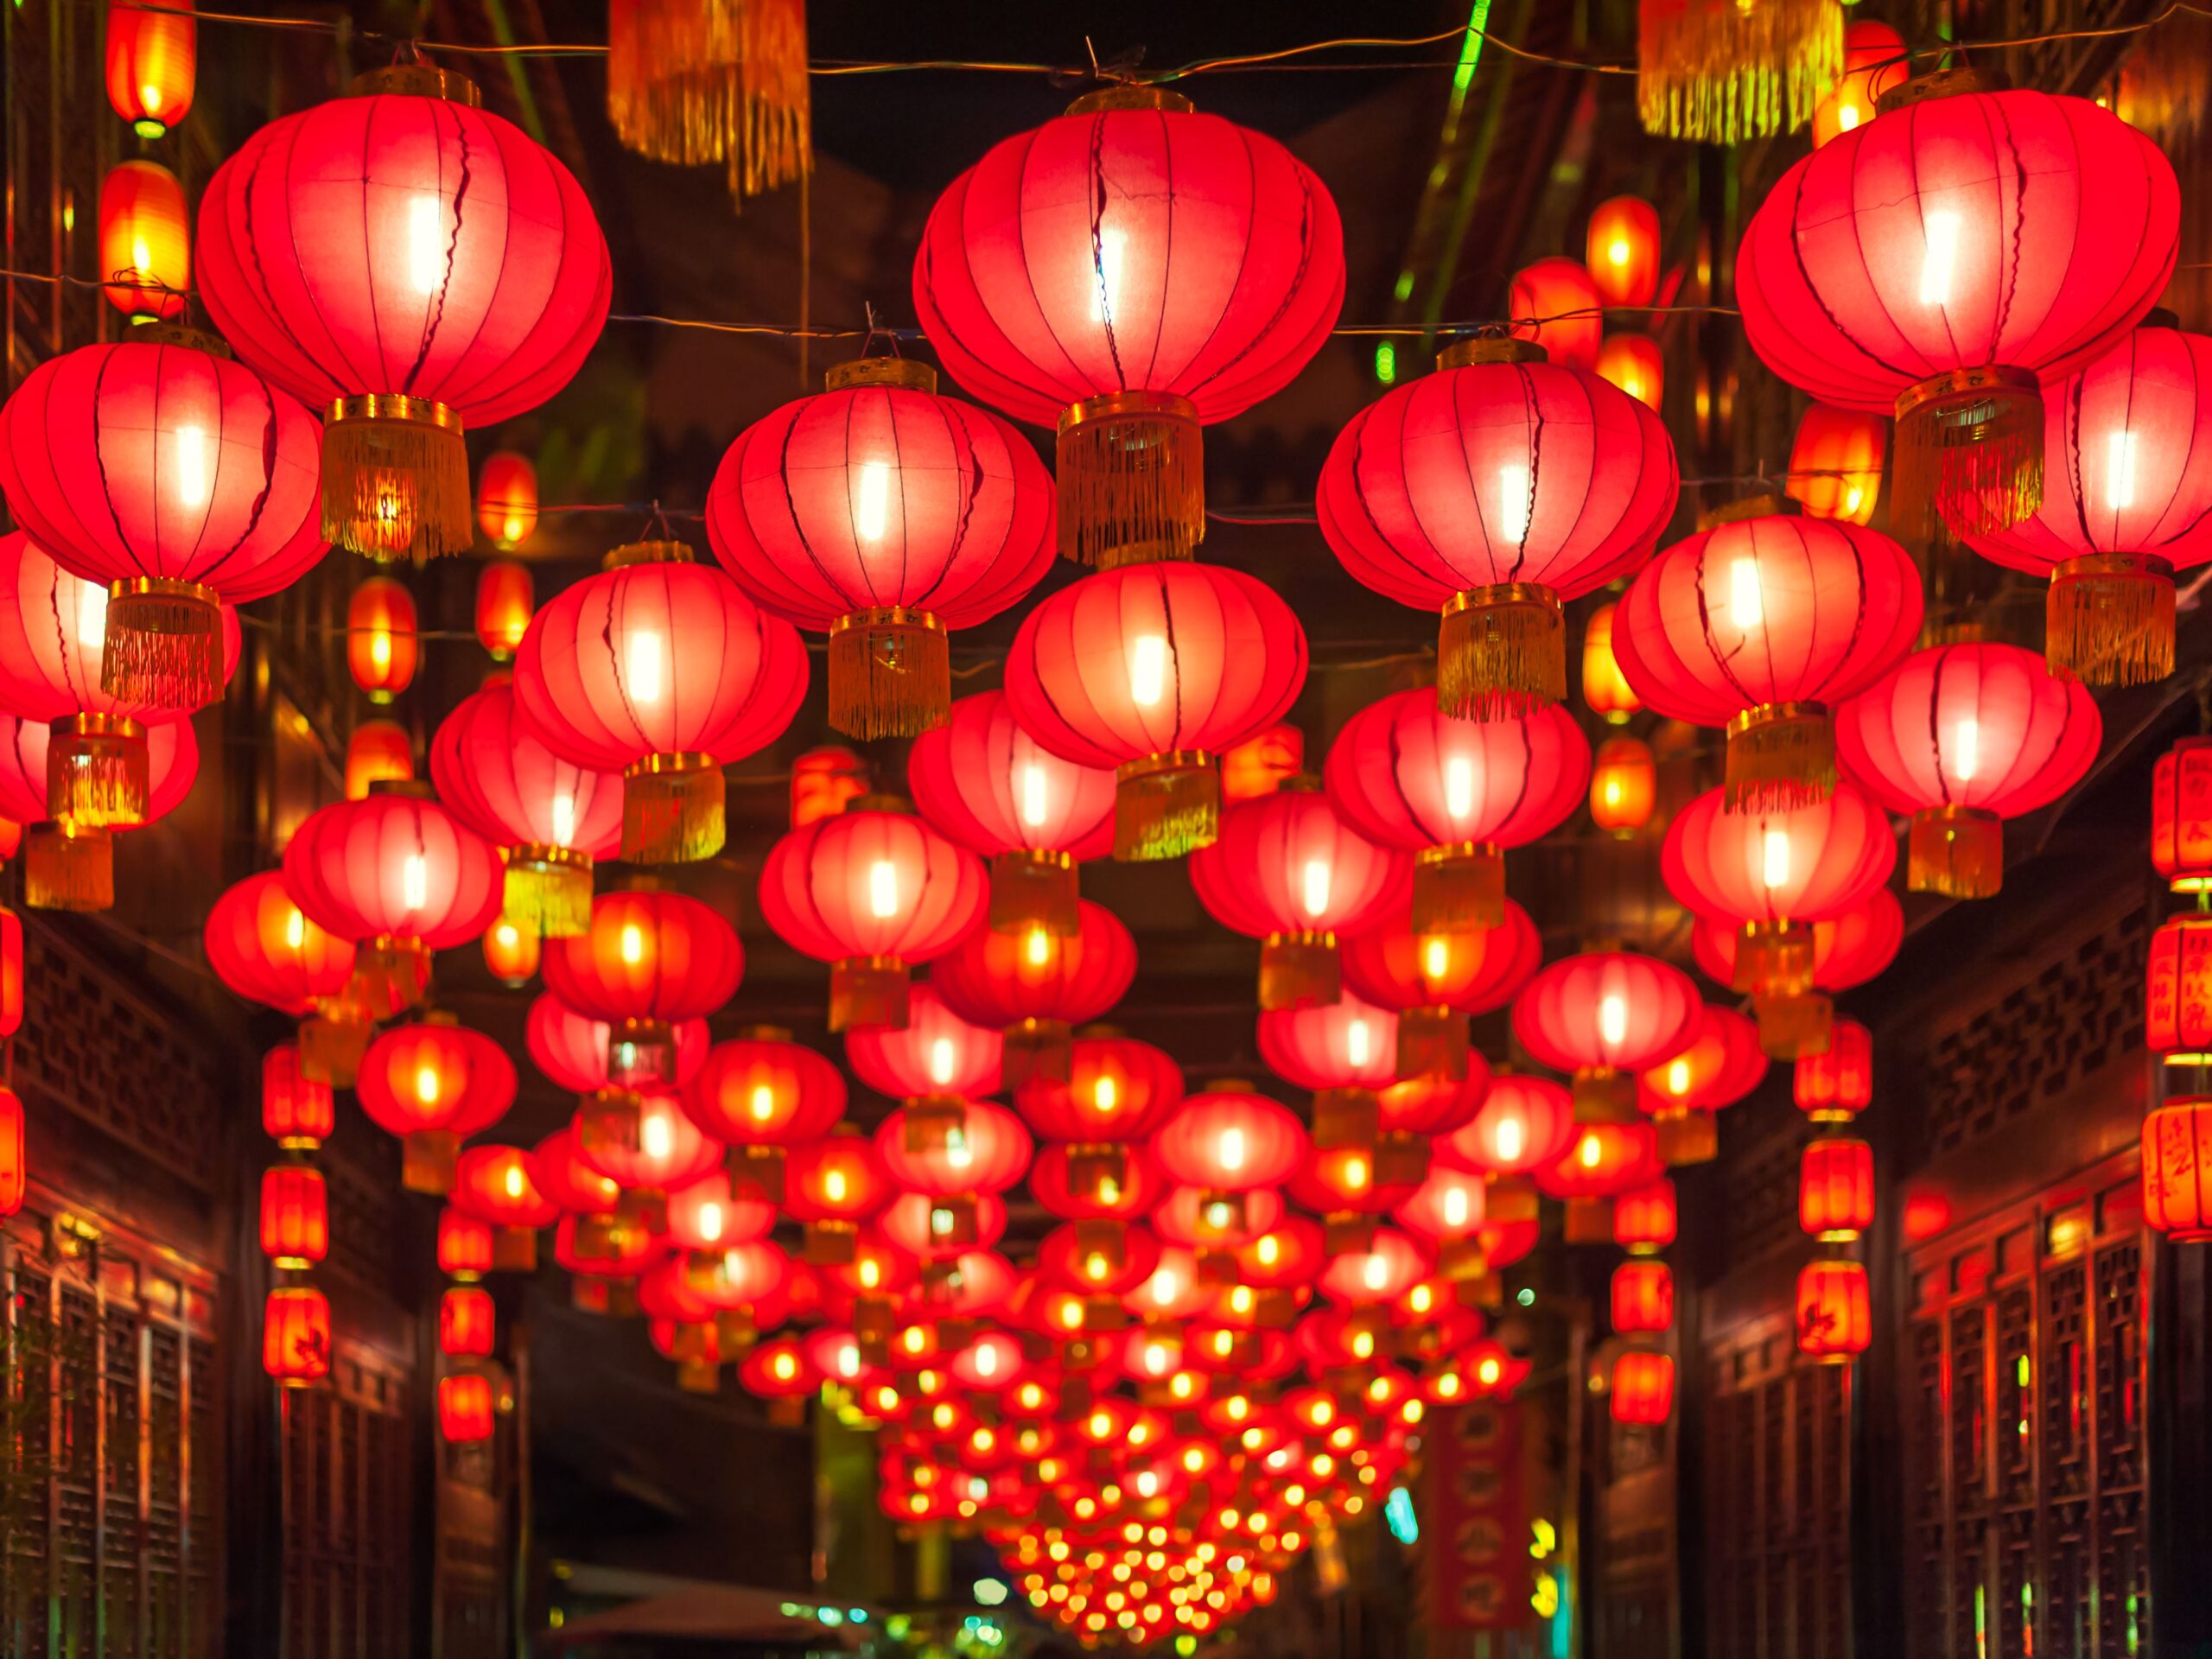 Lantern festivalthe traditional festival of China